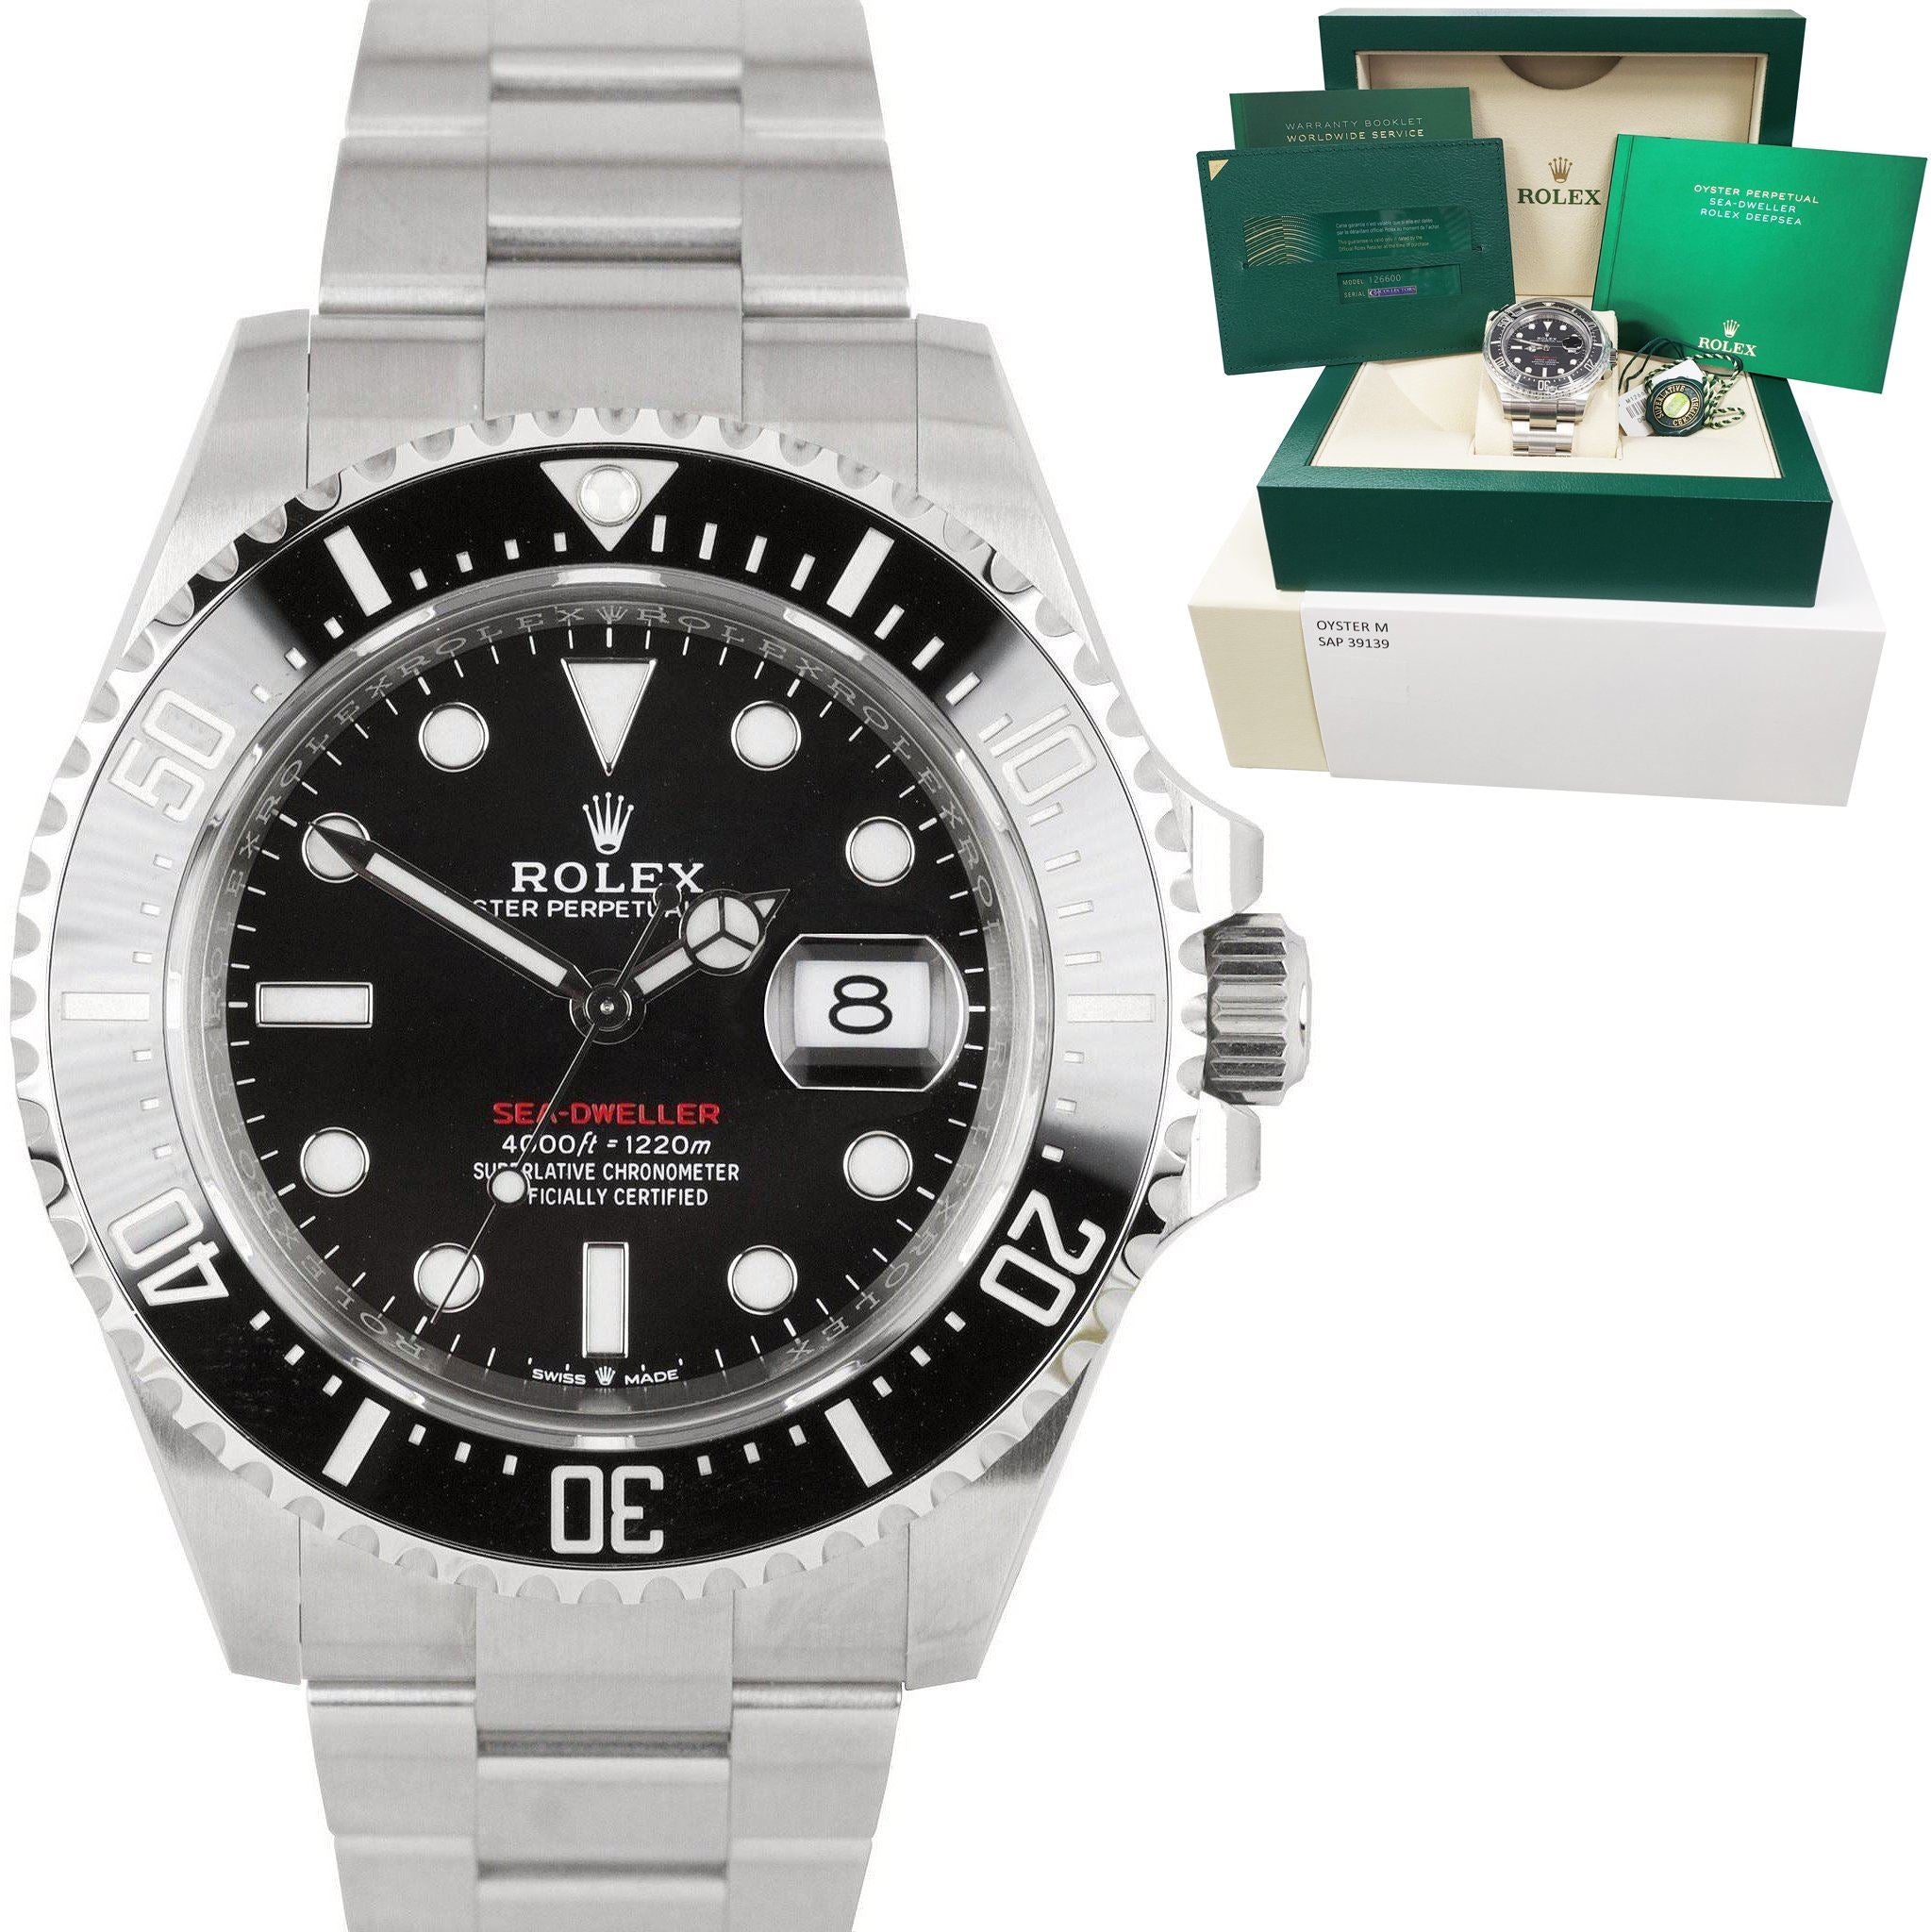 BRAND NEW Rolex Red Sea-Dweller 43mm Mark II 50th Anniversary Steel 126600 Watch